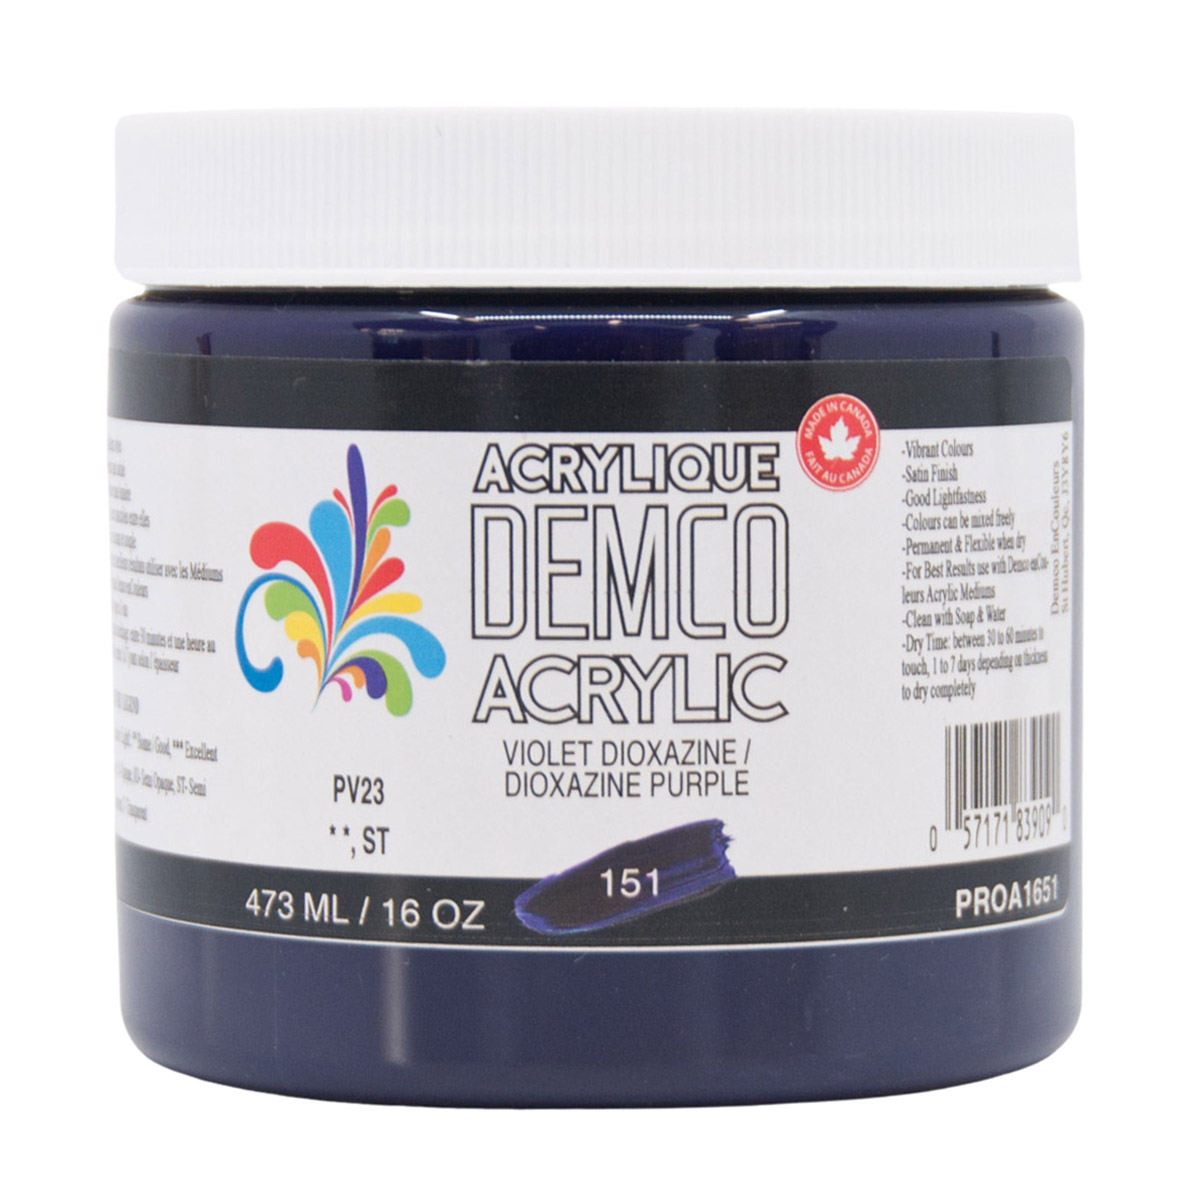 Demco Acrylic Dioxazine Purple 473ml/16oz